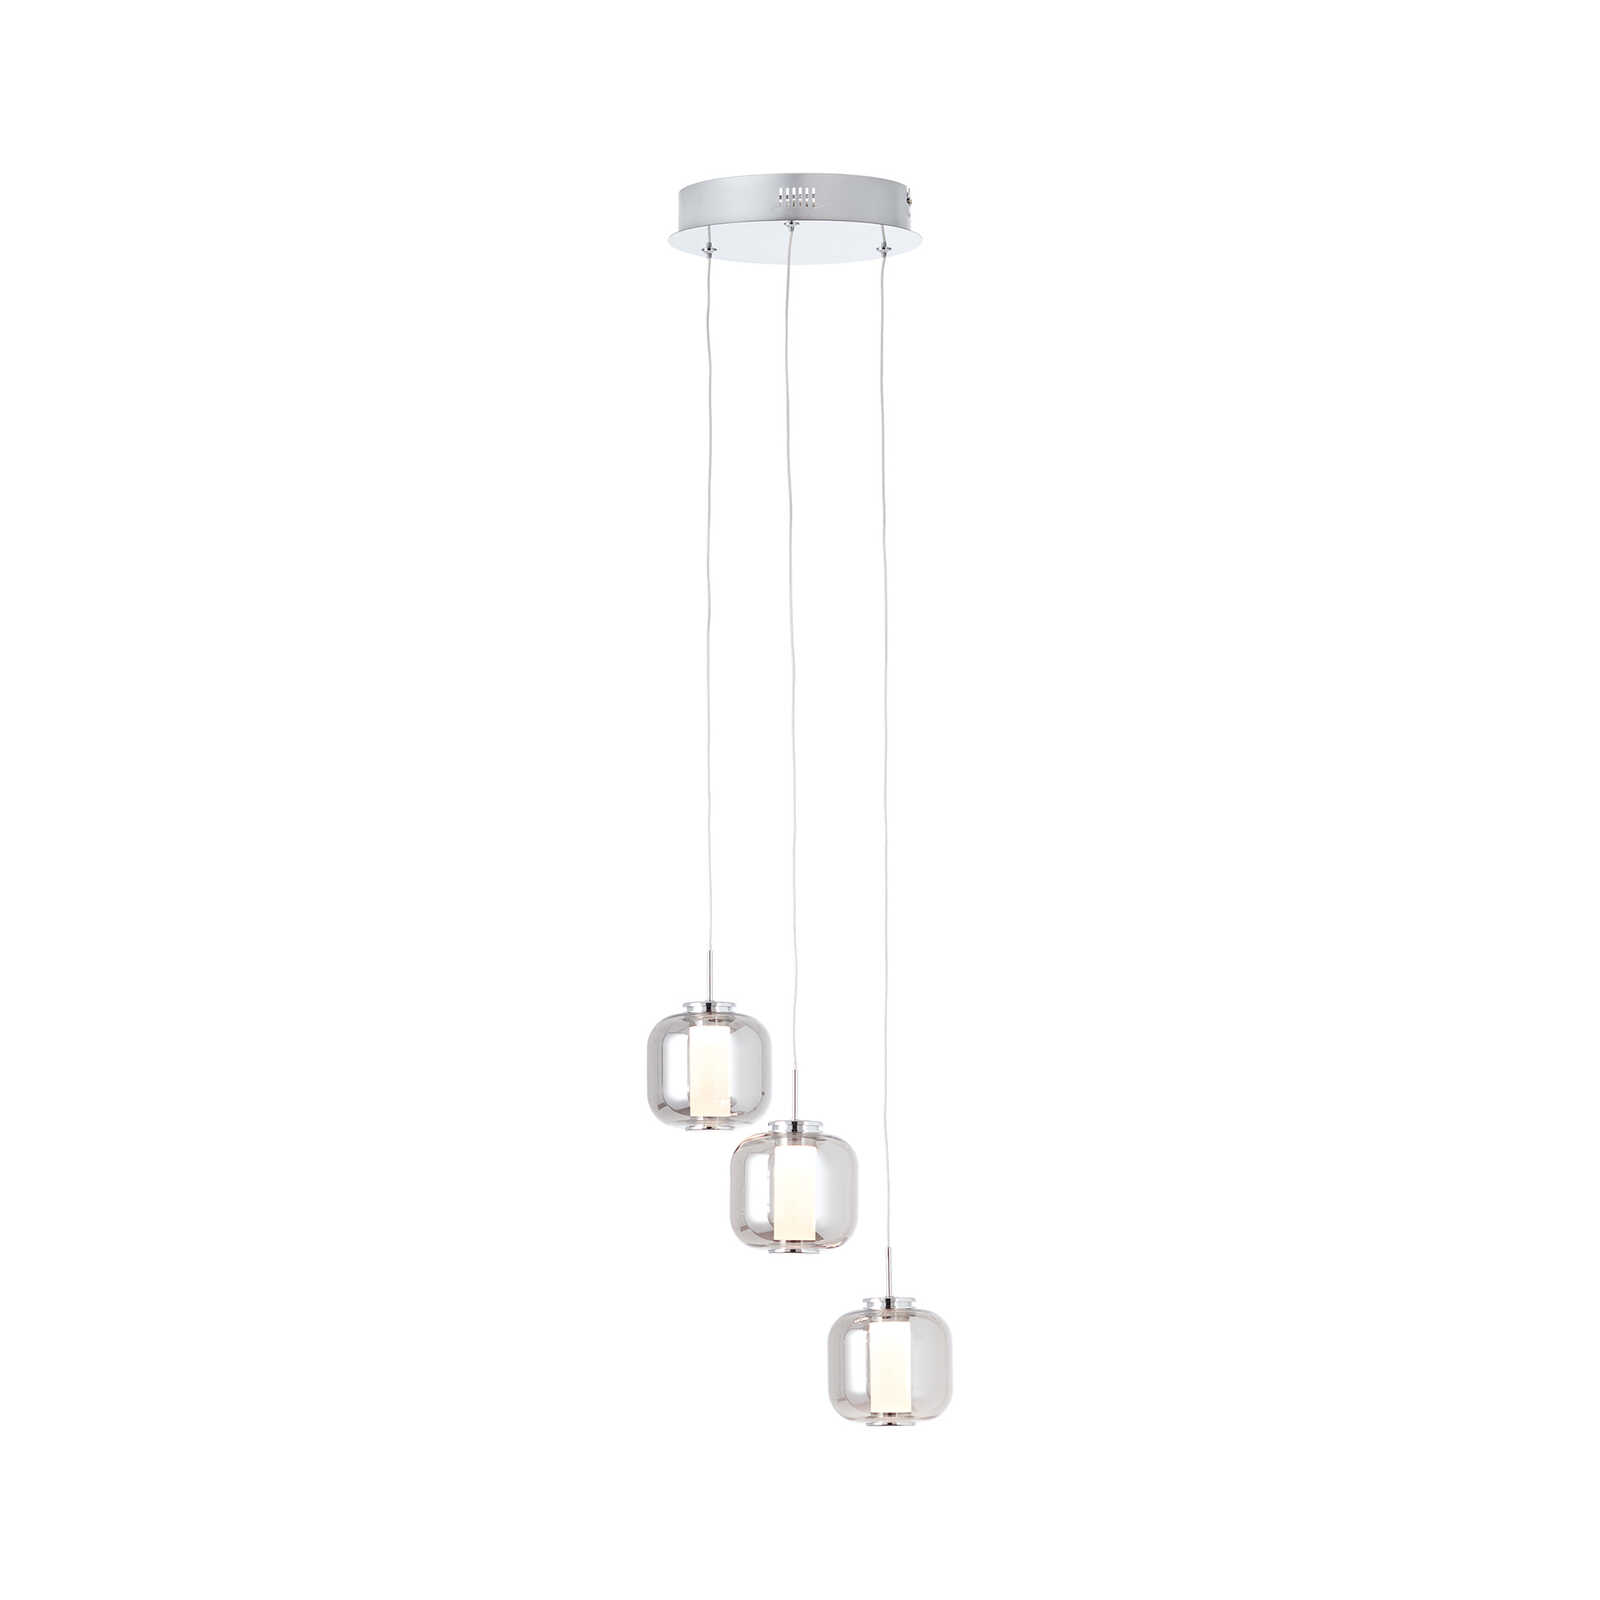 Glass pendant light - Martin 2 - Grey
